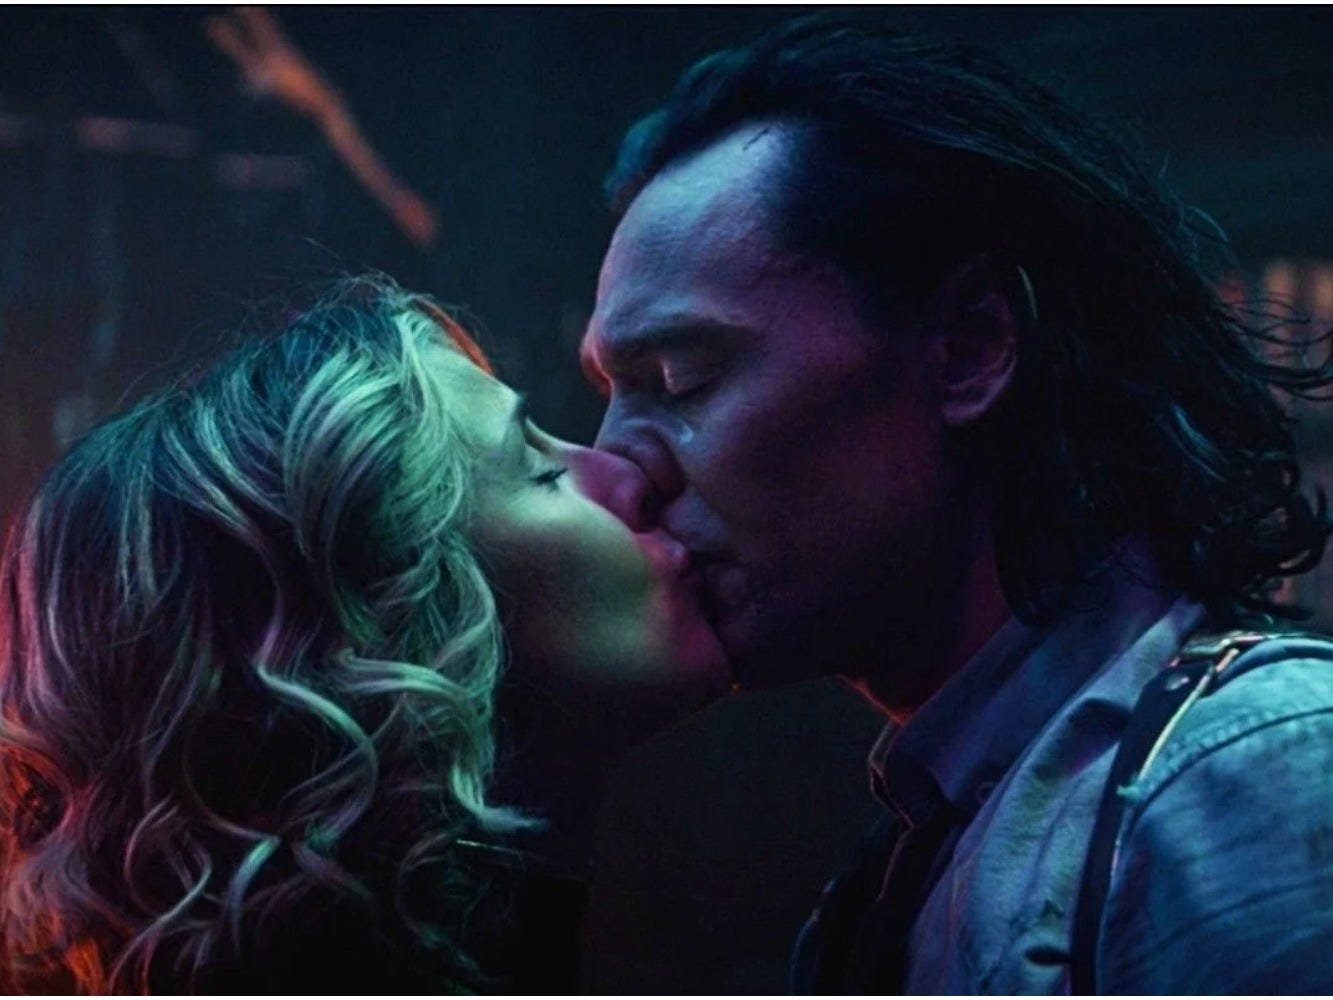 Sylvie and Loki kiss